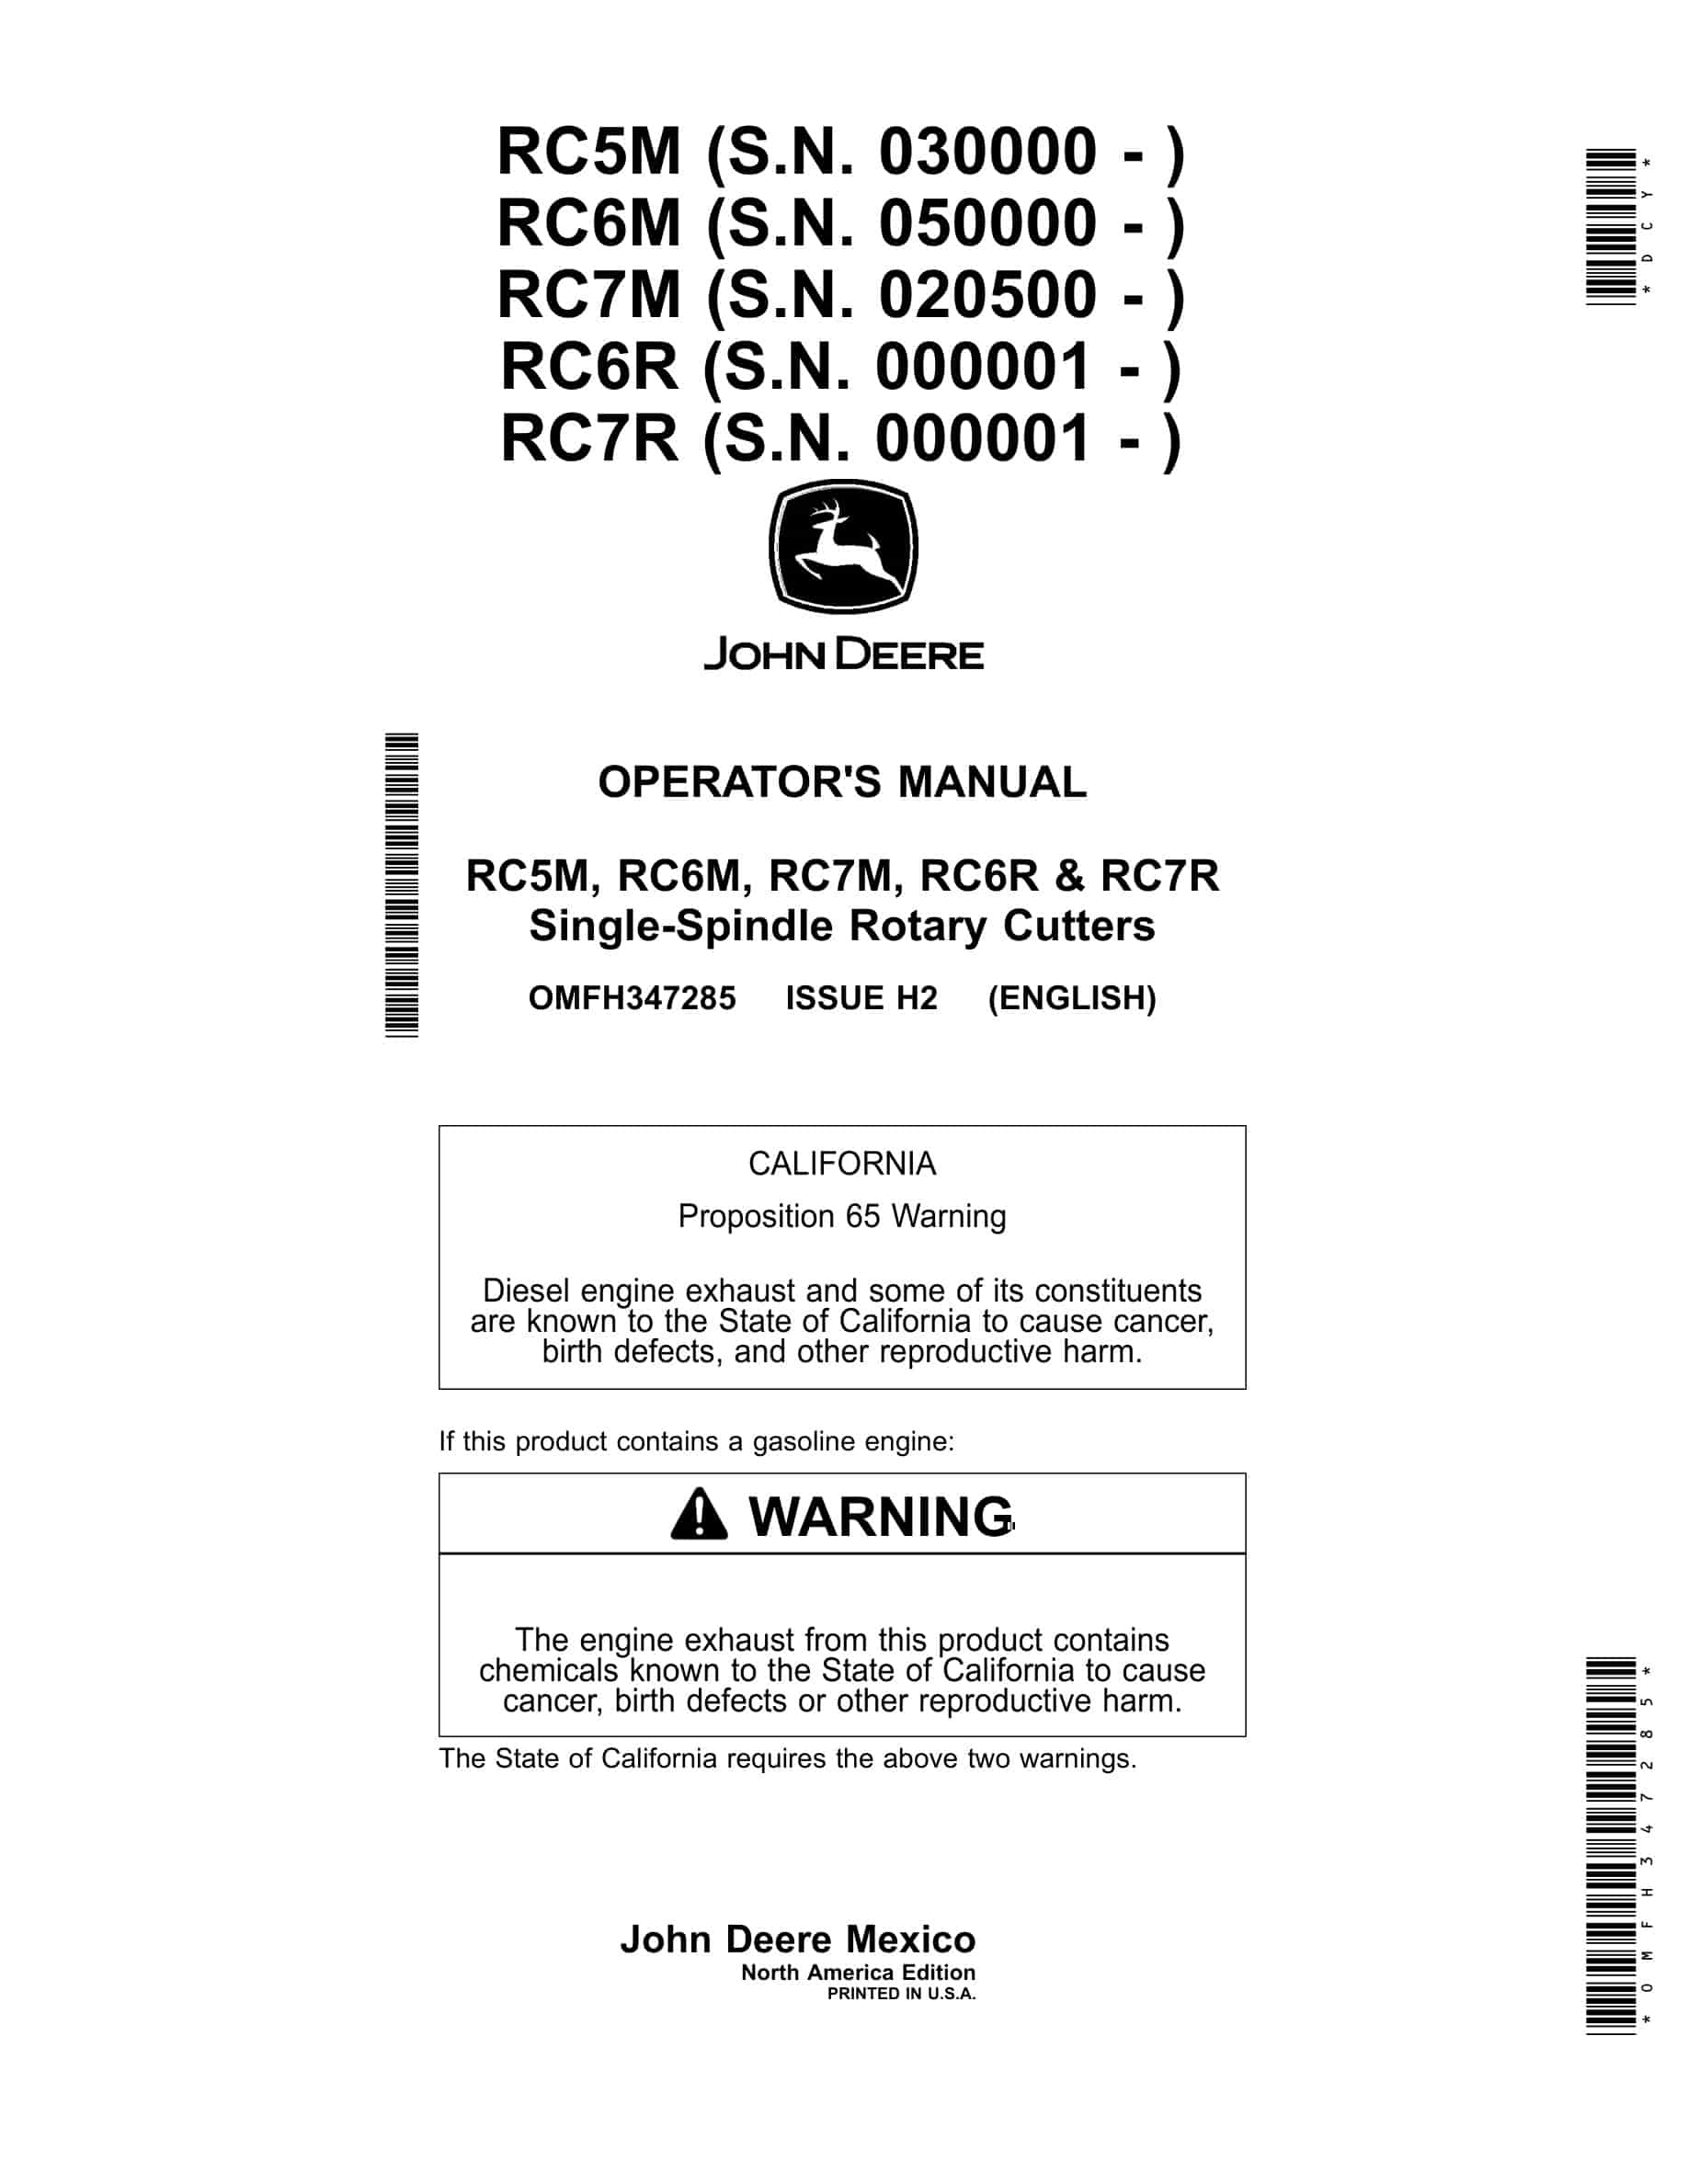 John Deere RC5M, RC6M, RC7M, RC6R & RC7R Single-Spindle Rotary Cutter Operator Manual OMFH347285-1